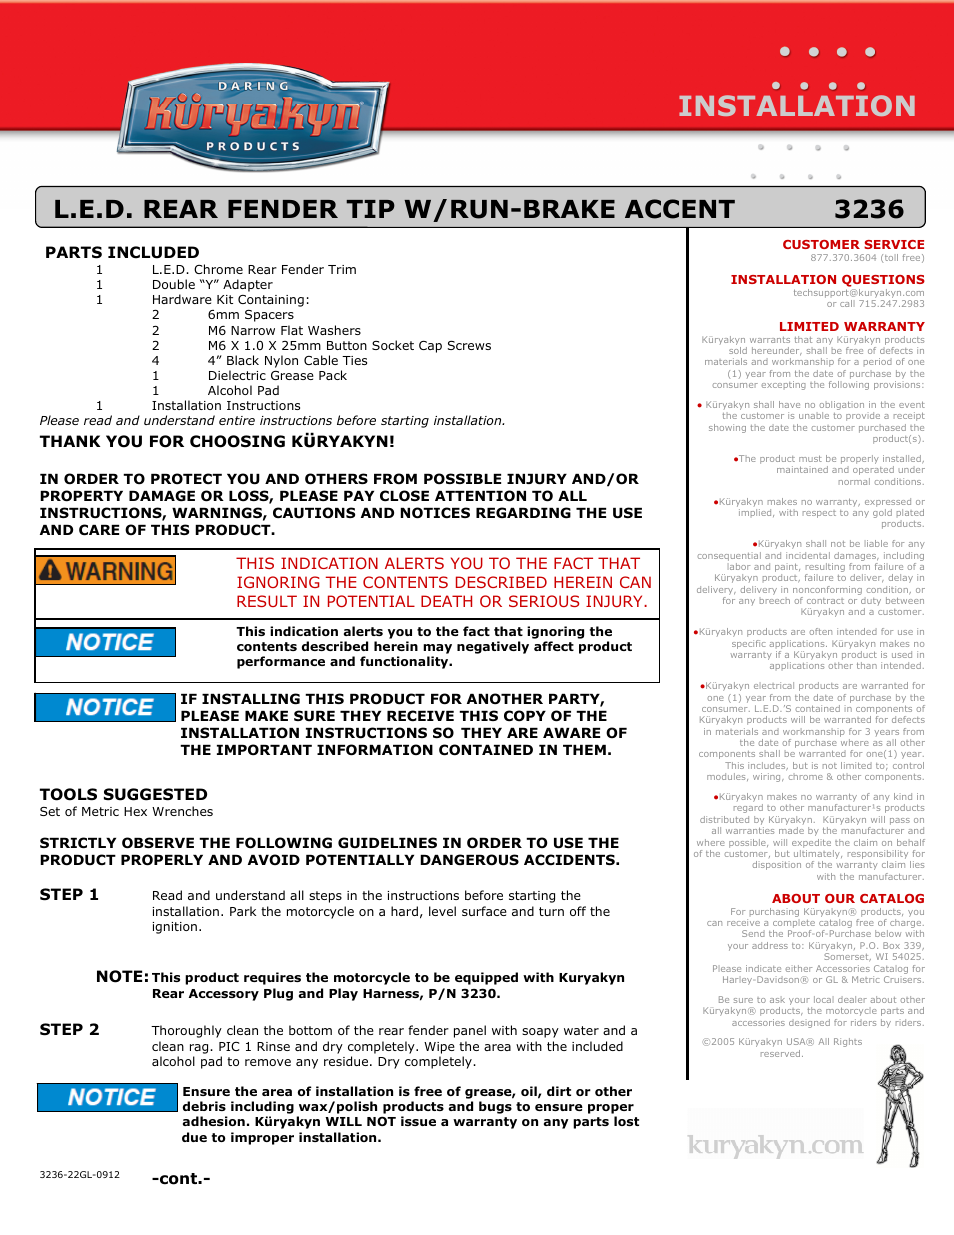 3236 L.E.D. REAR FENDER TIP W/RUN-BRAKE ACCENT